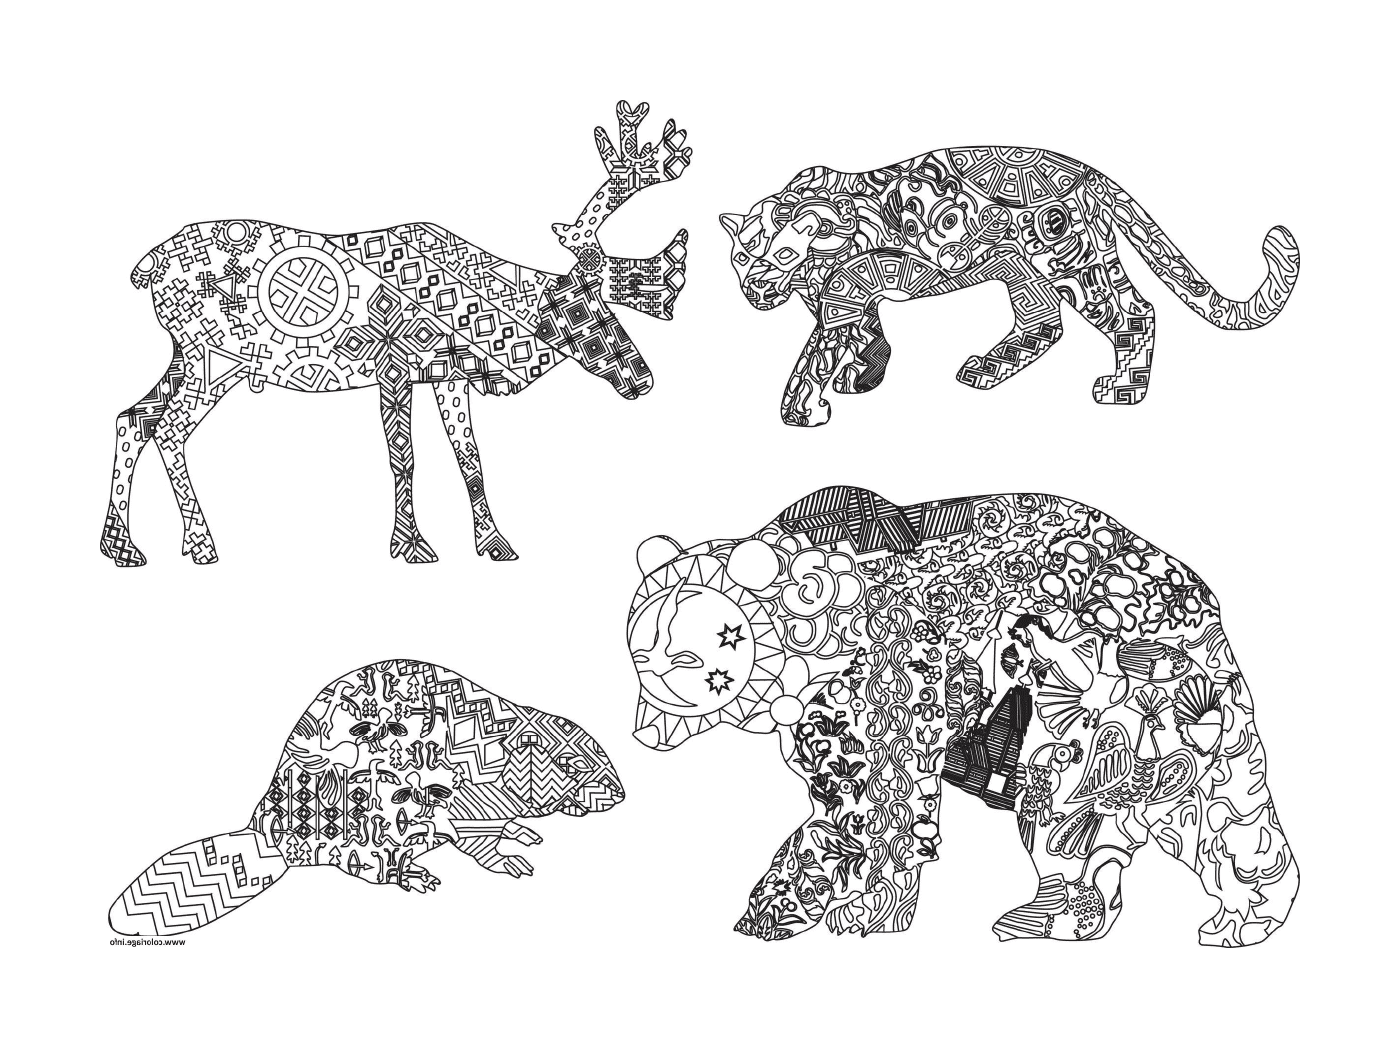  A set of animals drawn 